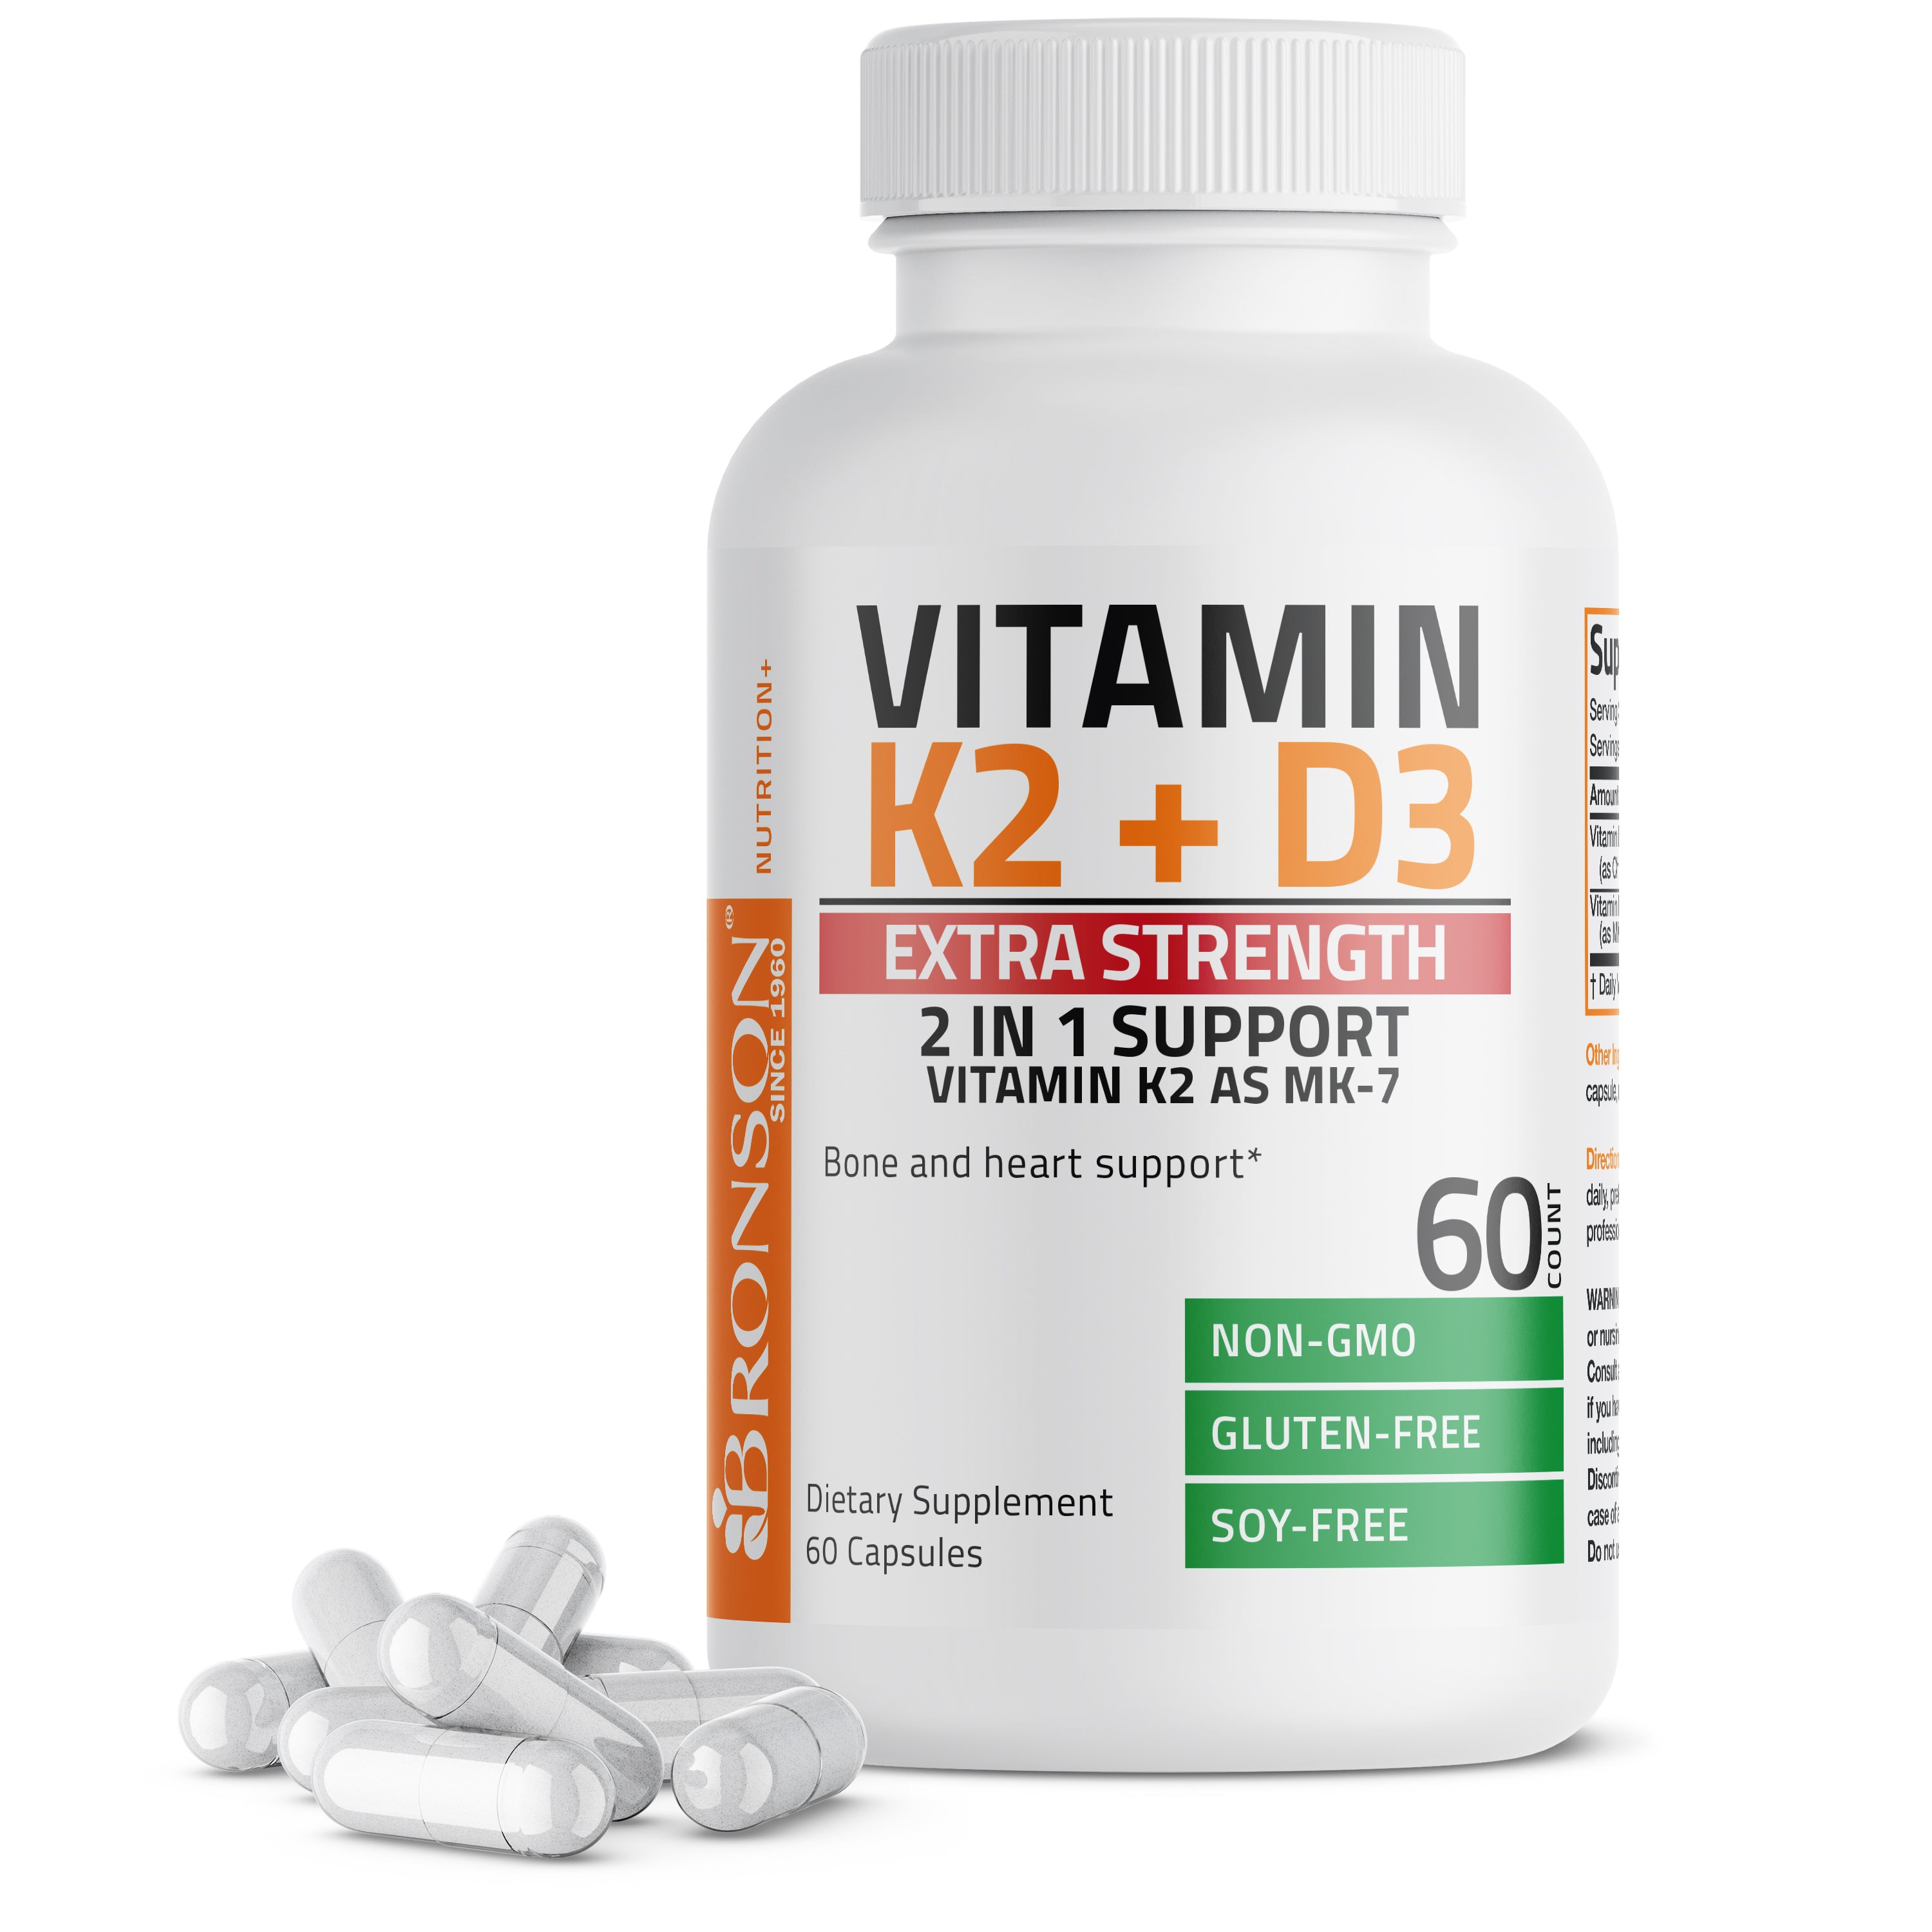 Vitamin K2 MK-7 Plus Vitamin D3 Extra Strength